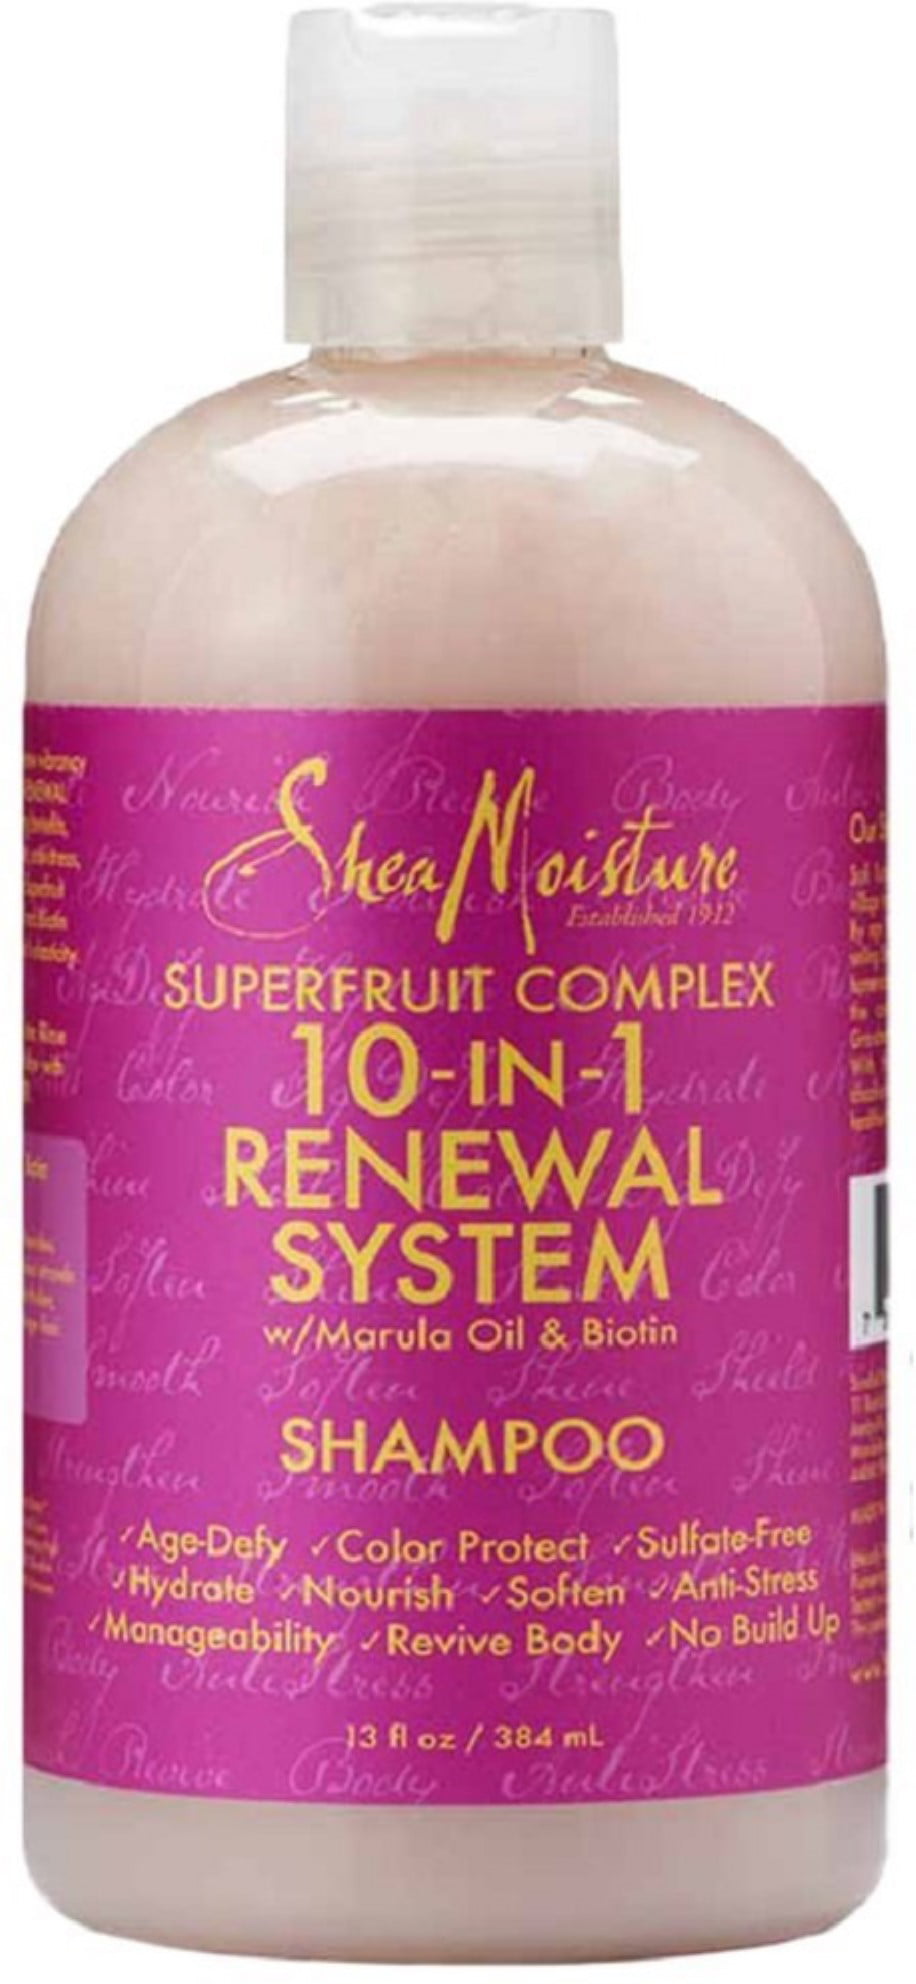 Shea moisture superfruit